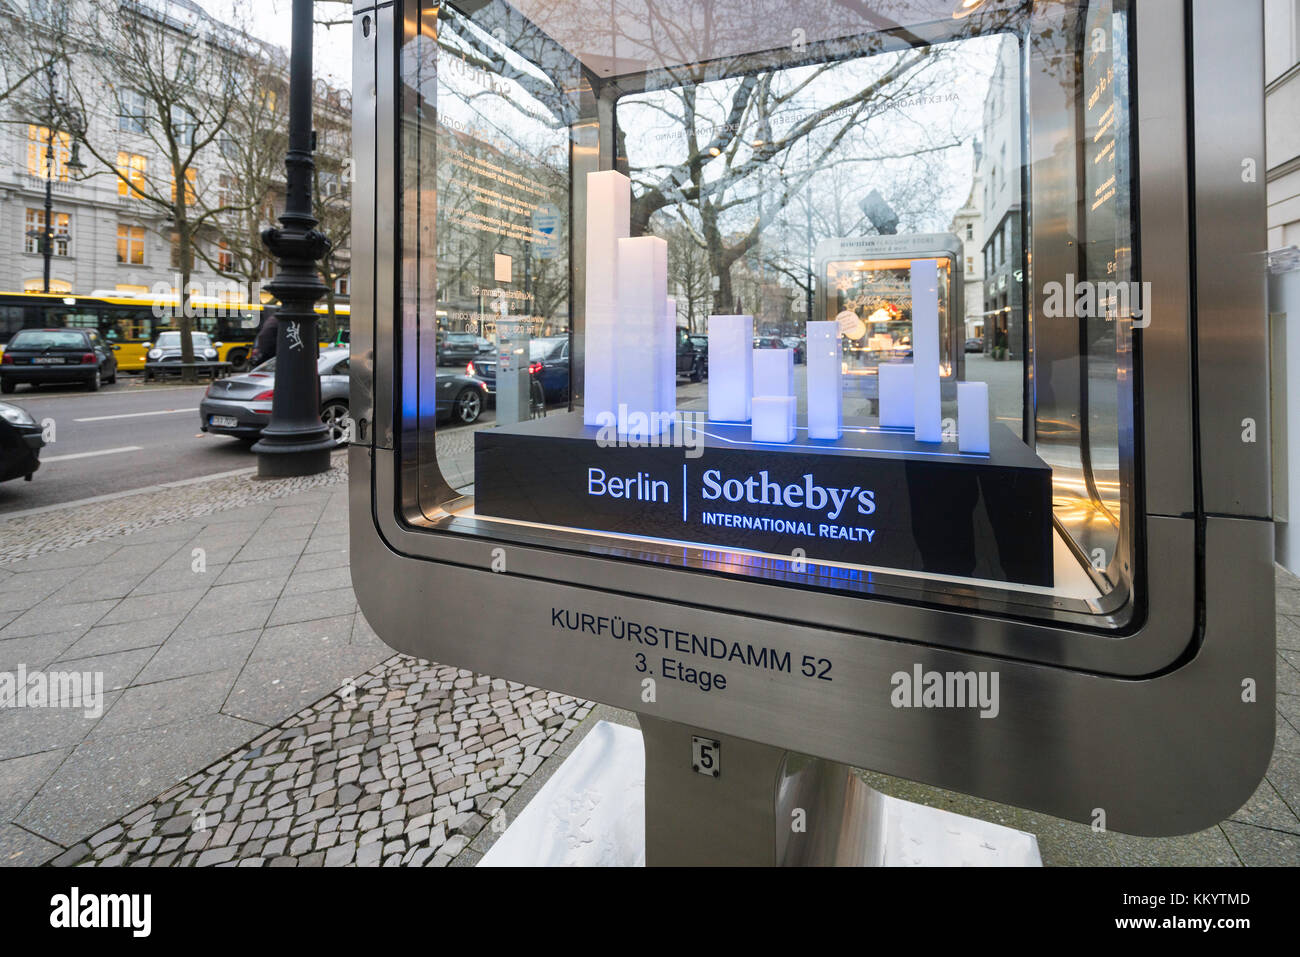 L'International Reality Glass Cabinet di Sotheby sulla famosa via commerciale Kurfurstendamm a Berlino, Germania. Foto Stock